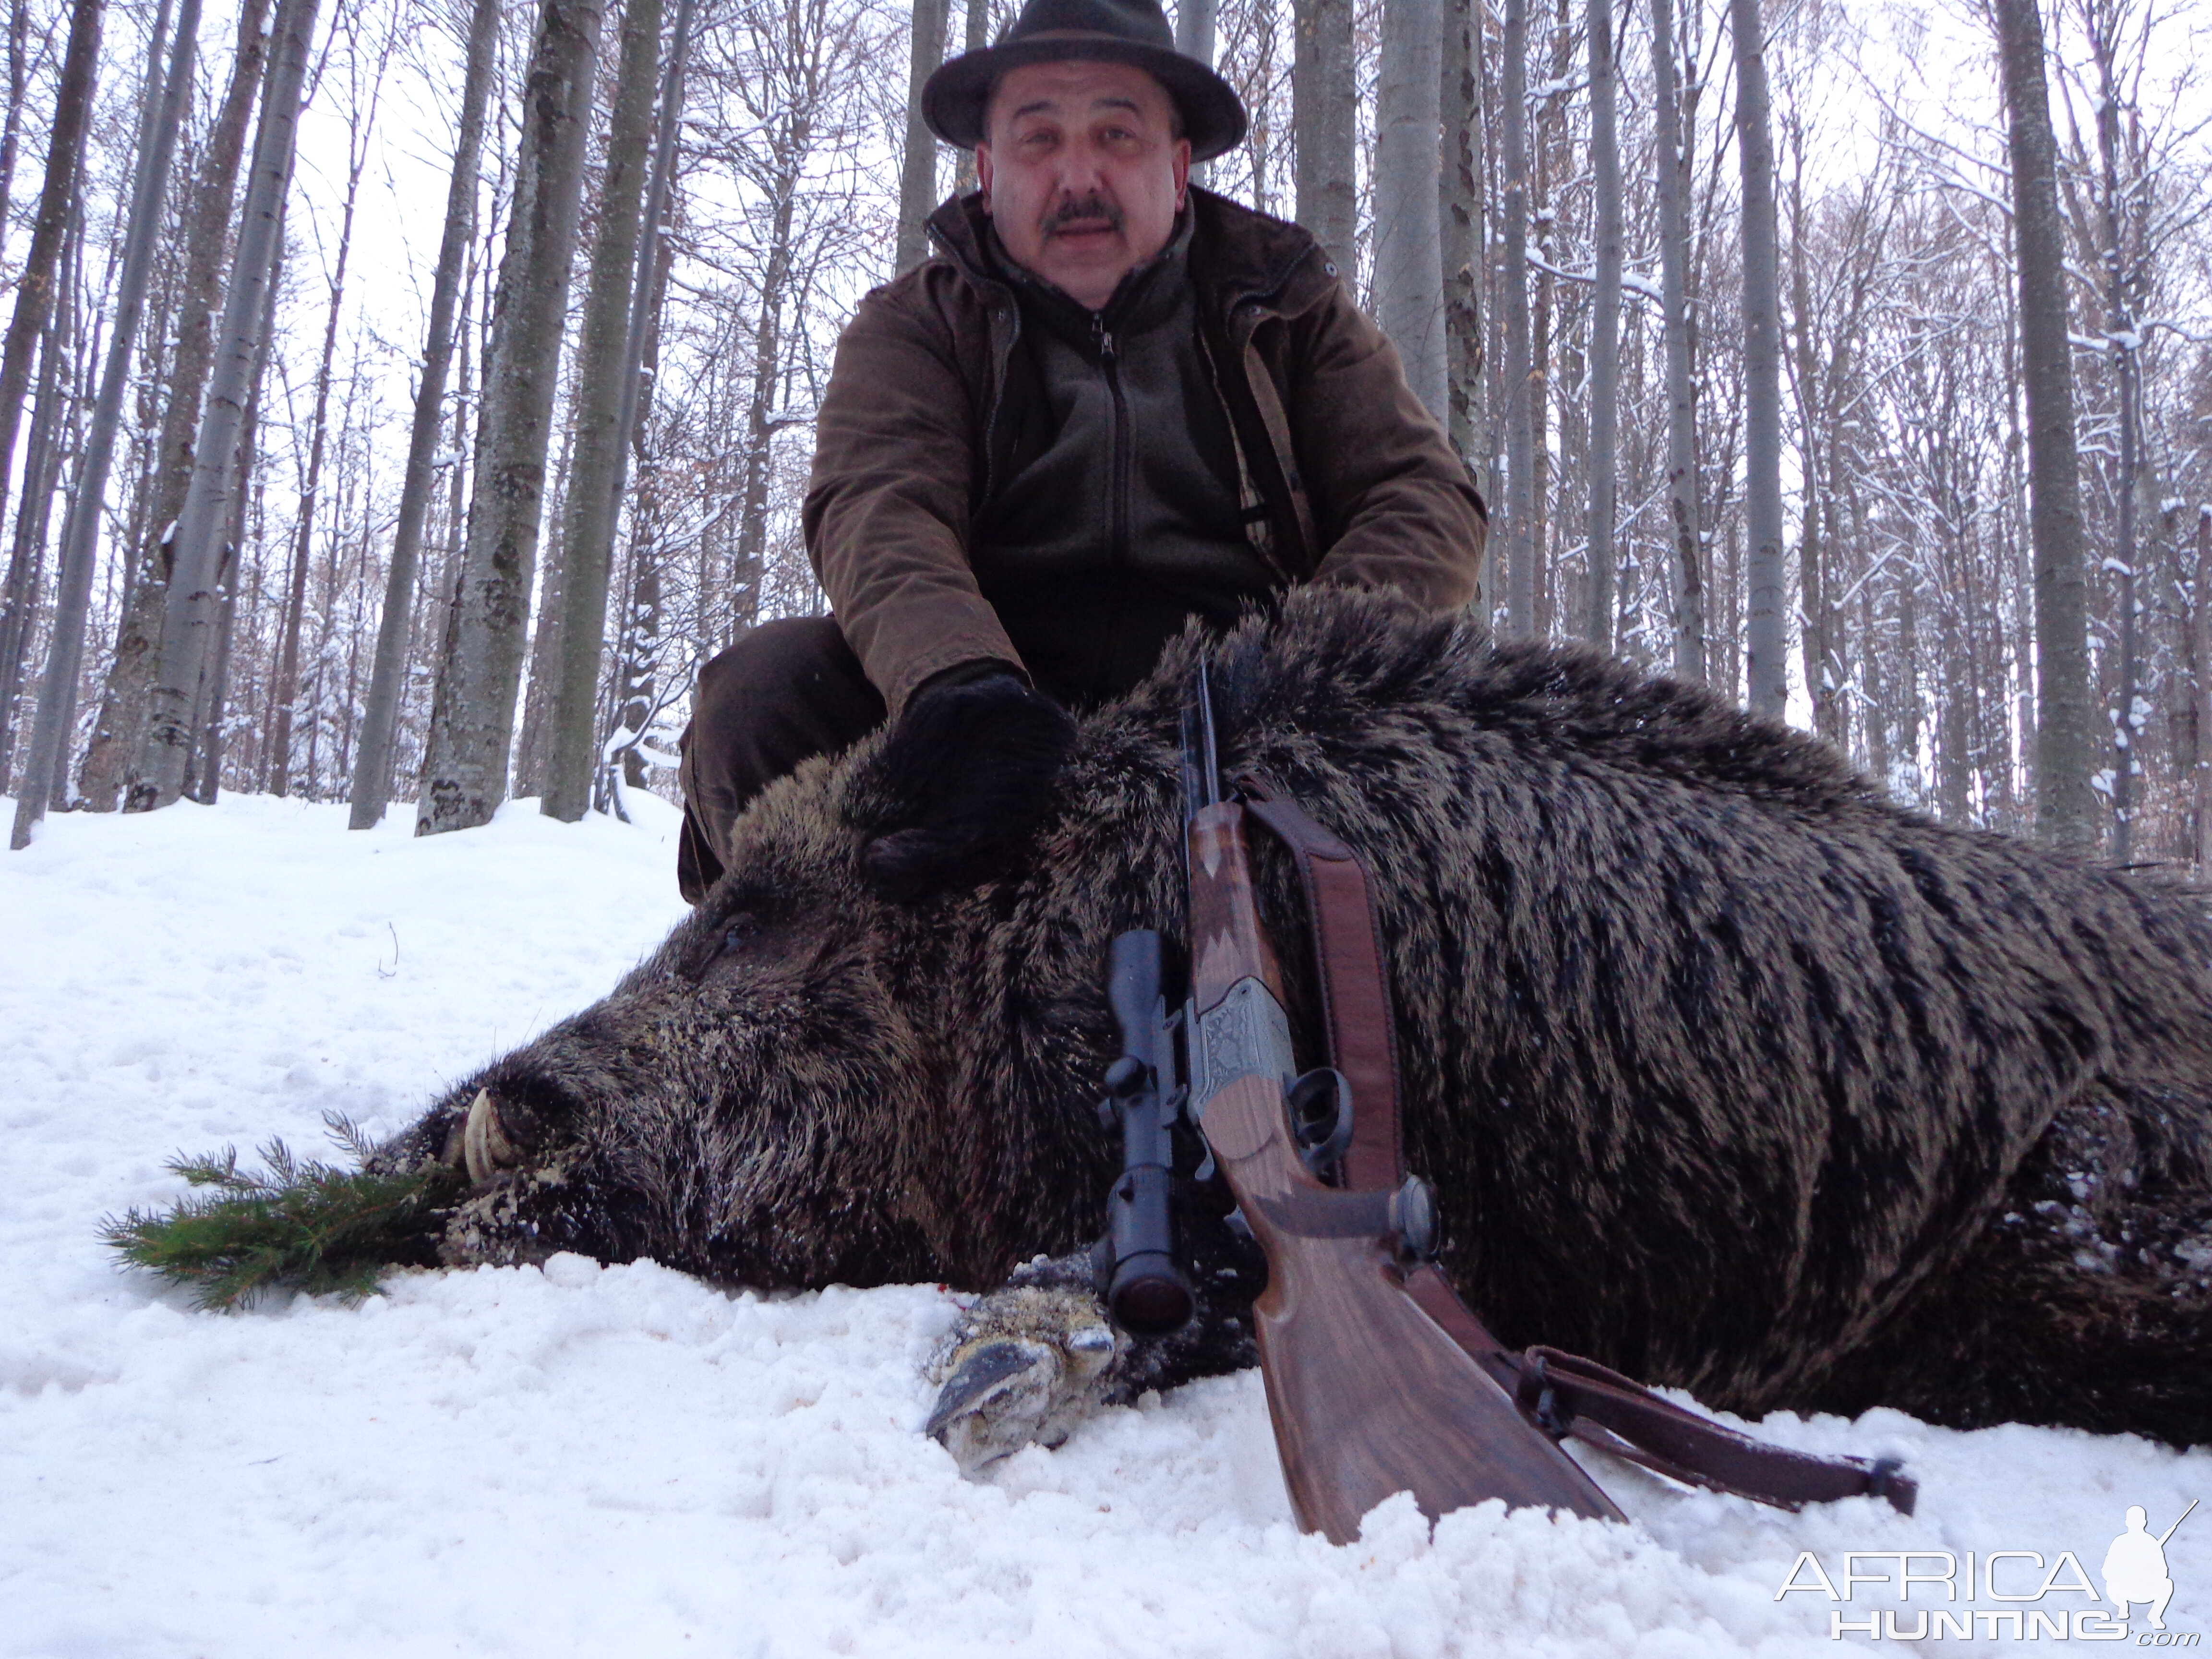 Wild Boar hunted in Romania, 2013